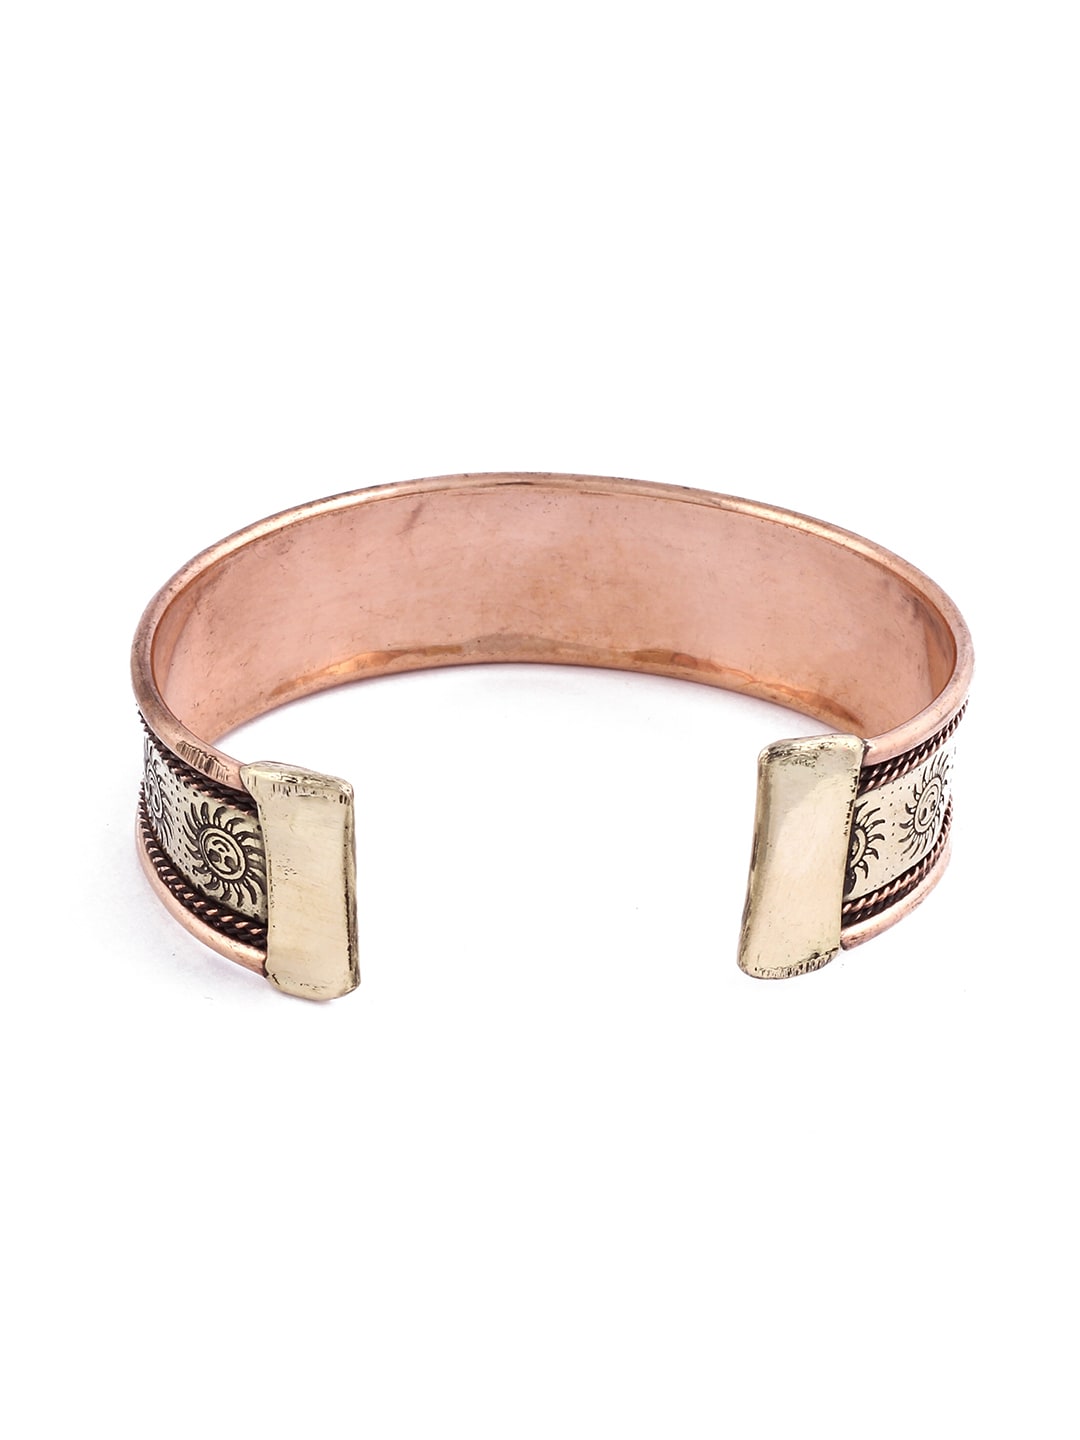 EL REGALO Men Brown Brass Antique Copper-Plated Cuff Bracelet - for Men
Style ID: 17157484